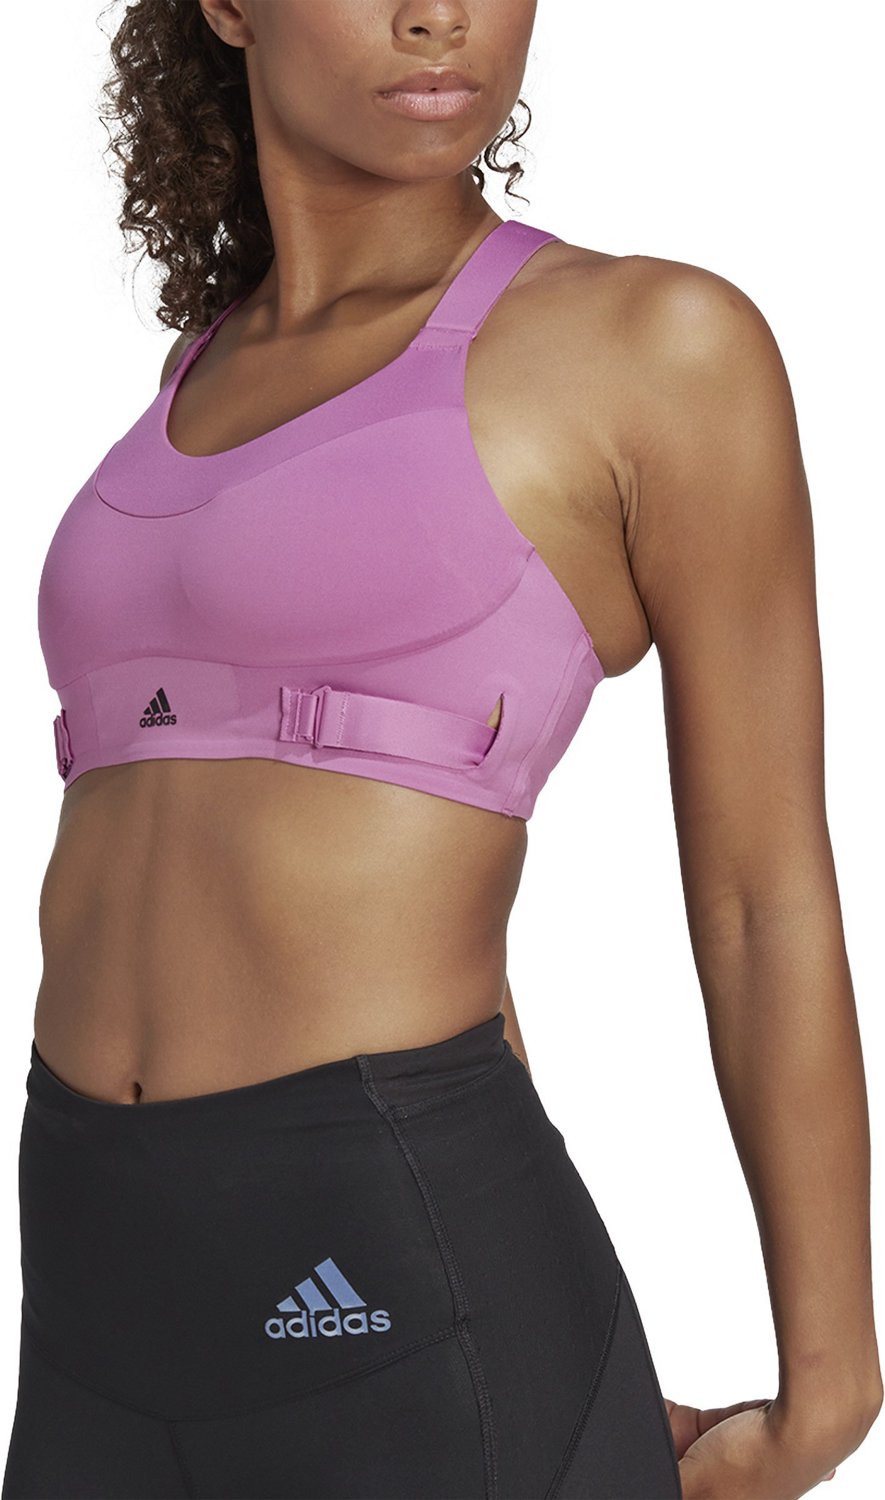 adidas plus Training high support sports bra in black